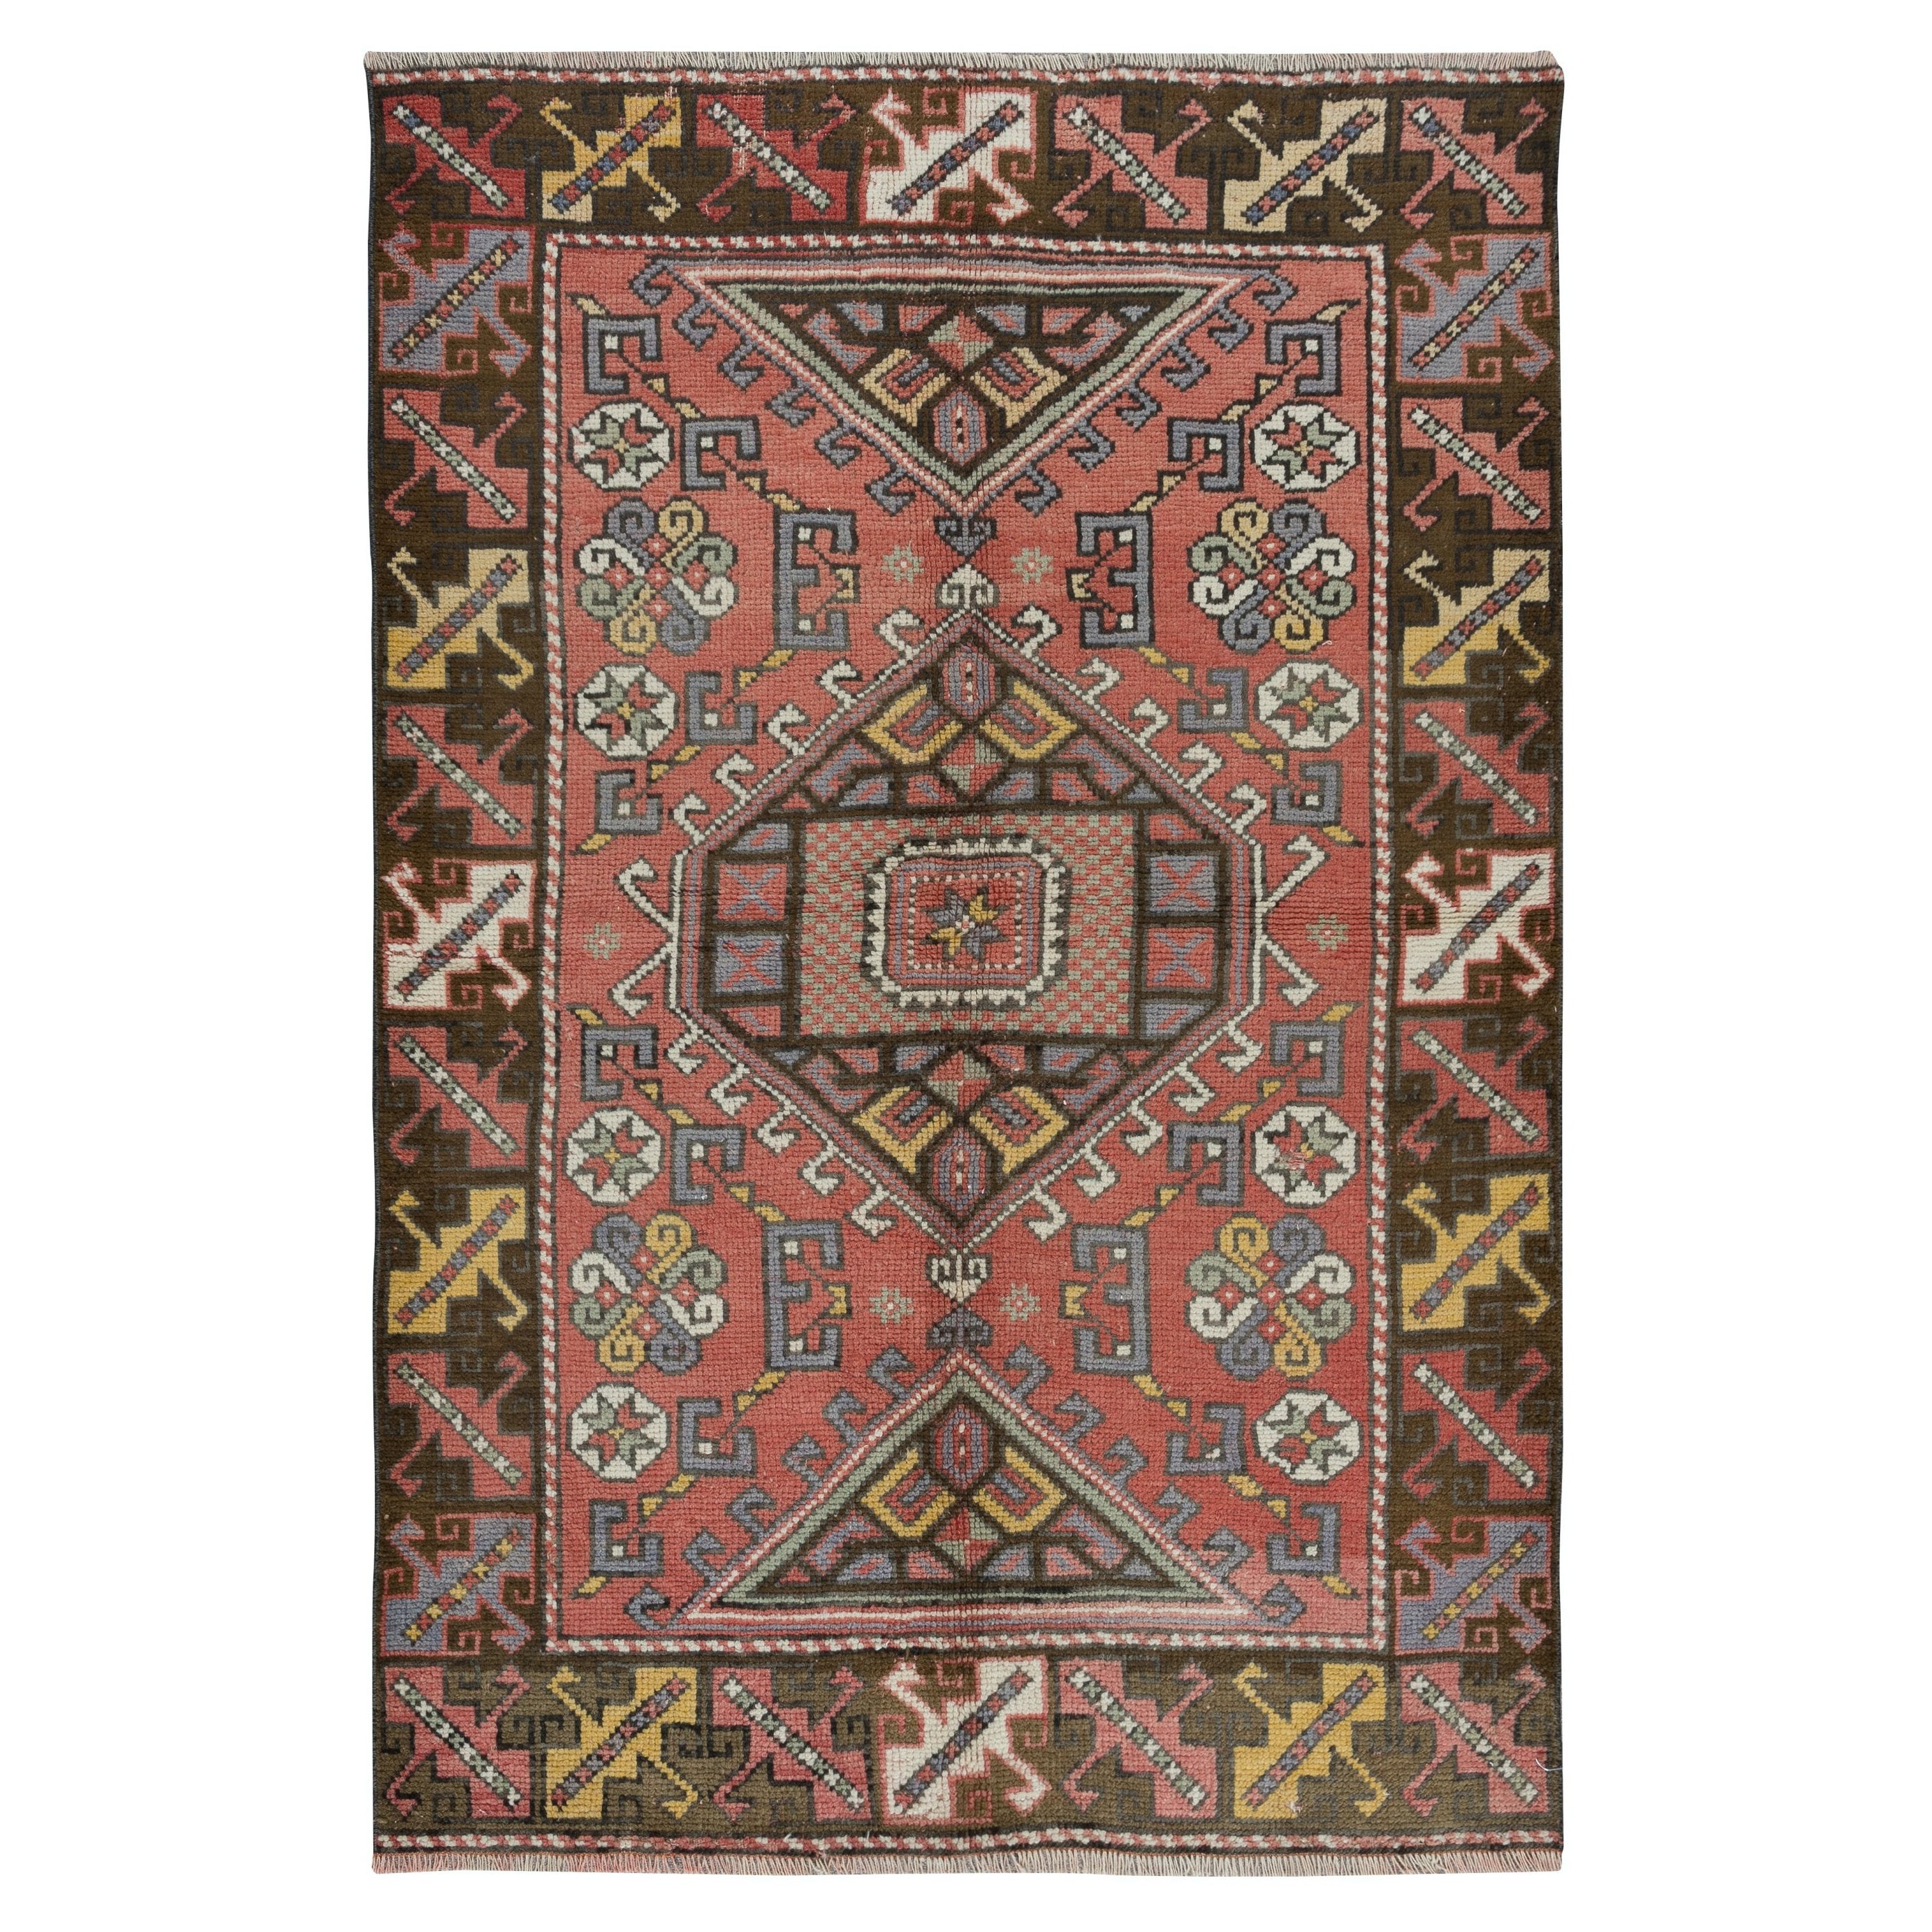 4x5.7 Ft Handmade Geometric Medallion Design Rug, Vintage Turkish Red Carpet For Sale